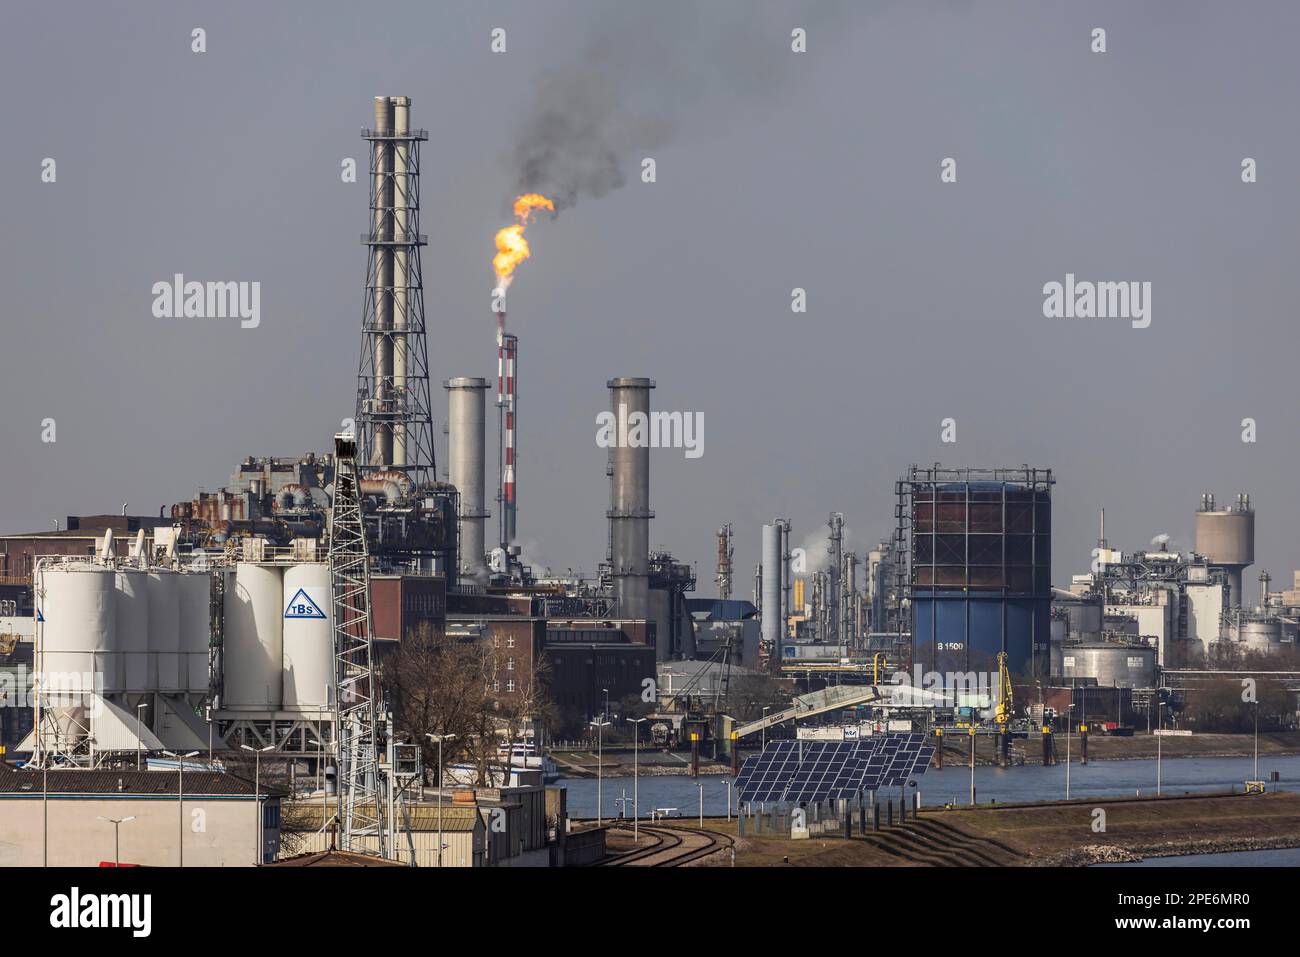 BASF plant site, exterior view with smoking chimneys, Ludwigshafen, Rhineland-Palatinate, Germany Stock Photo